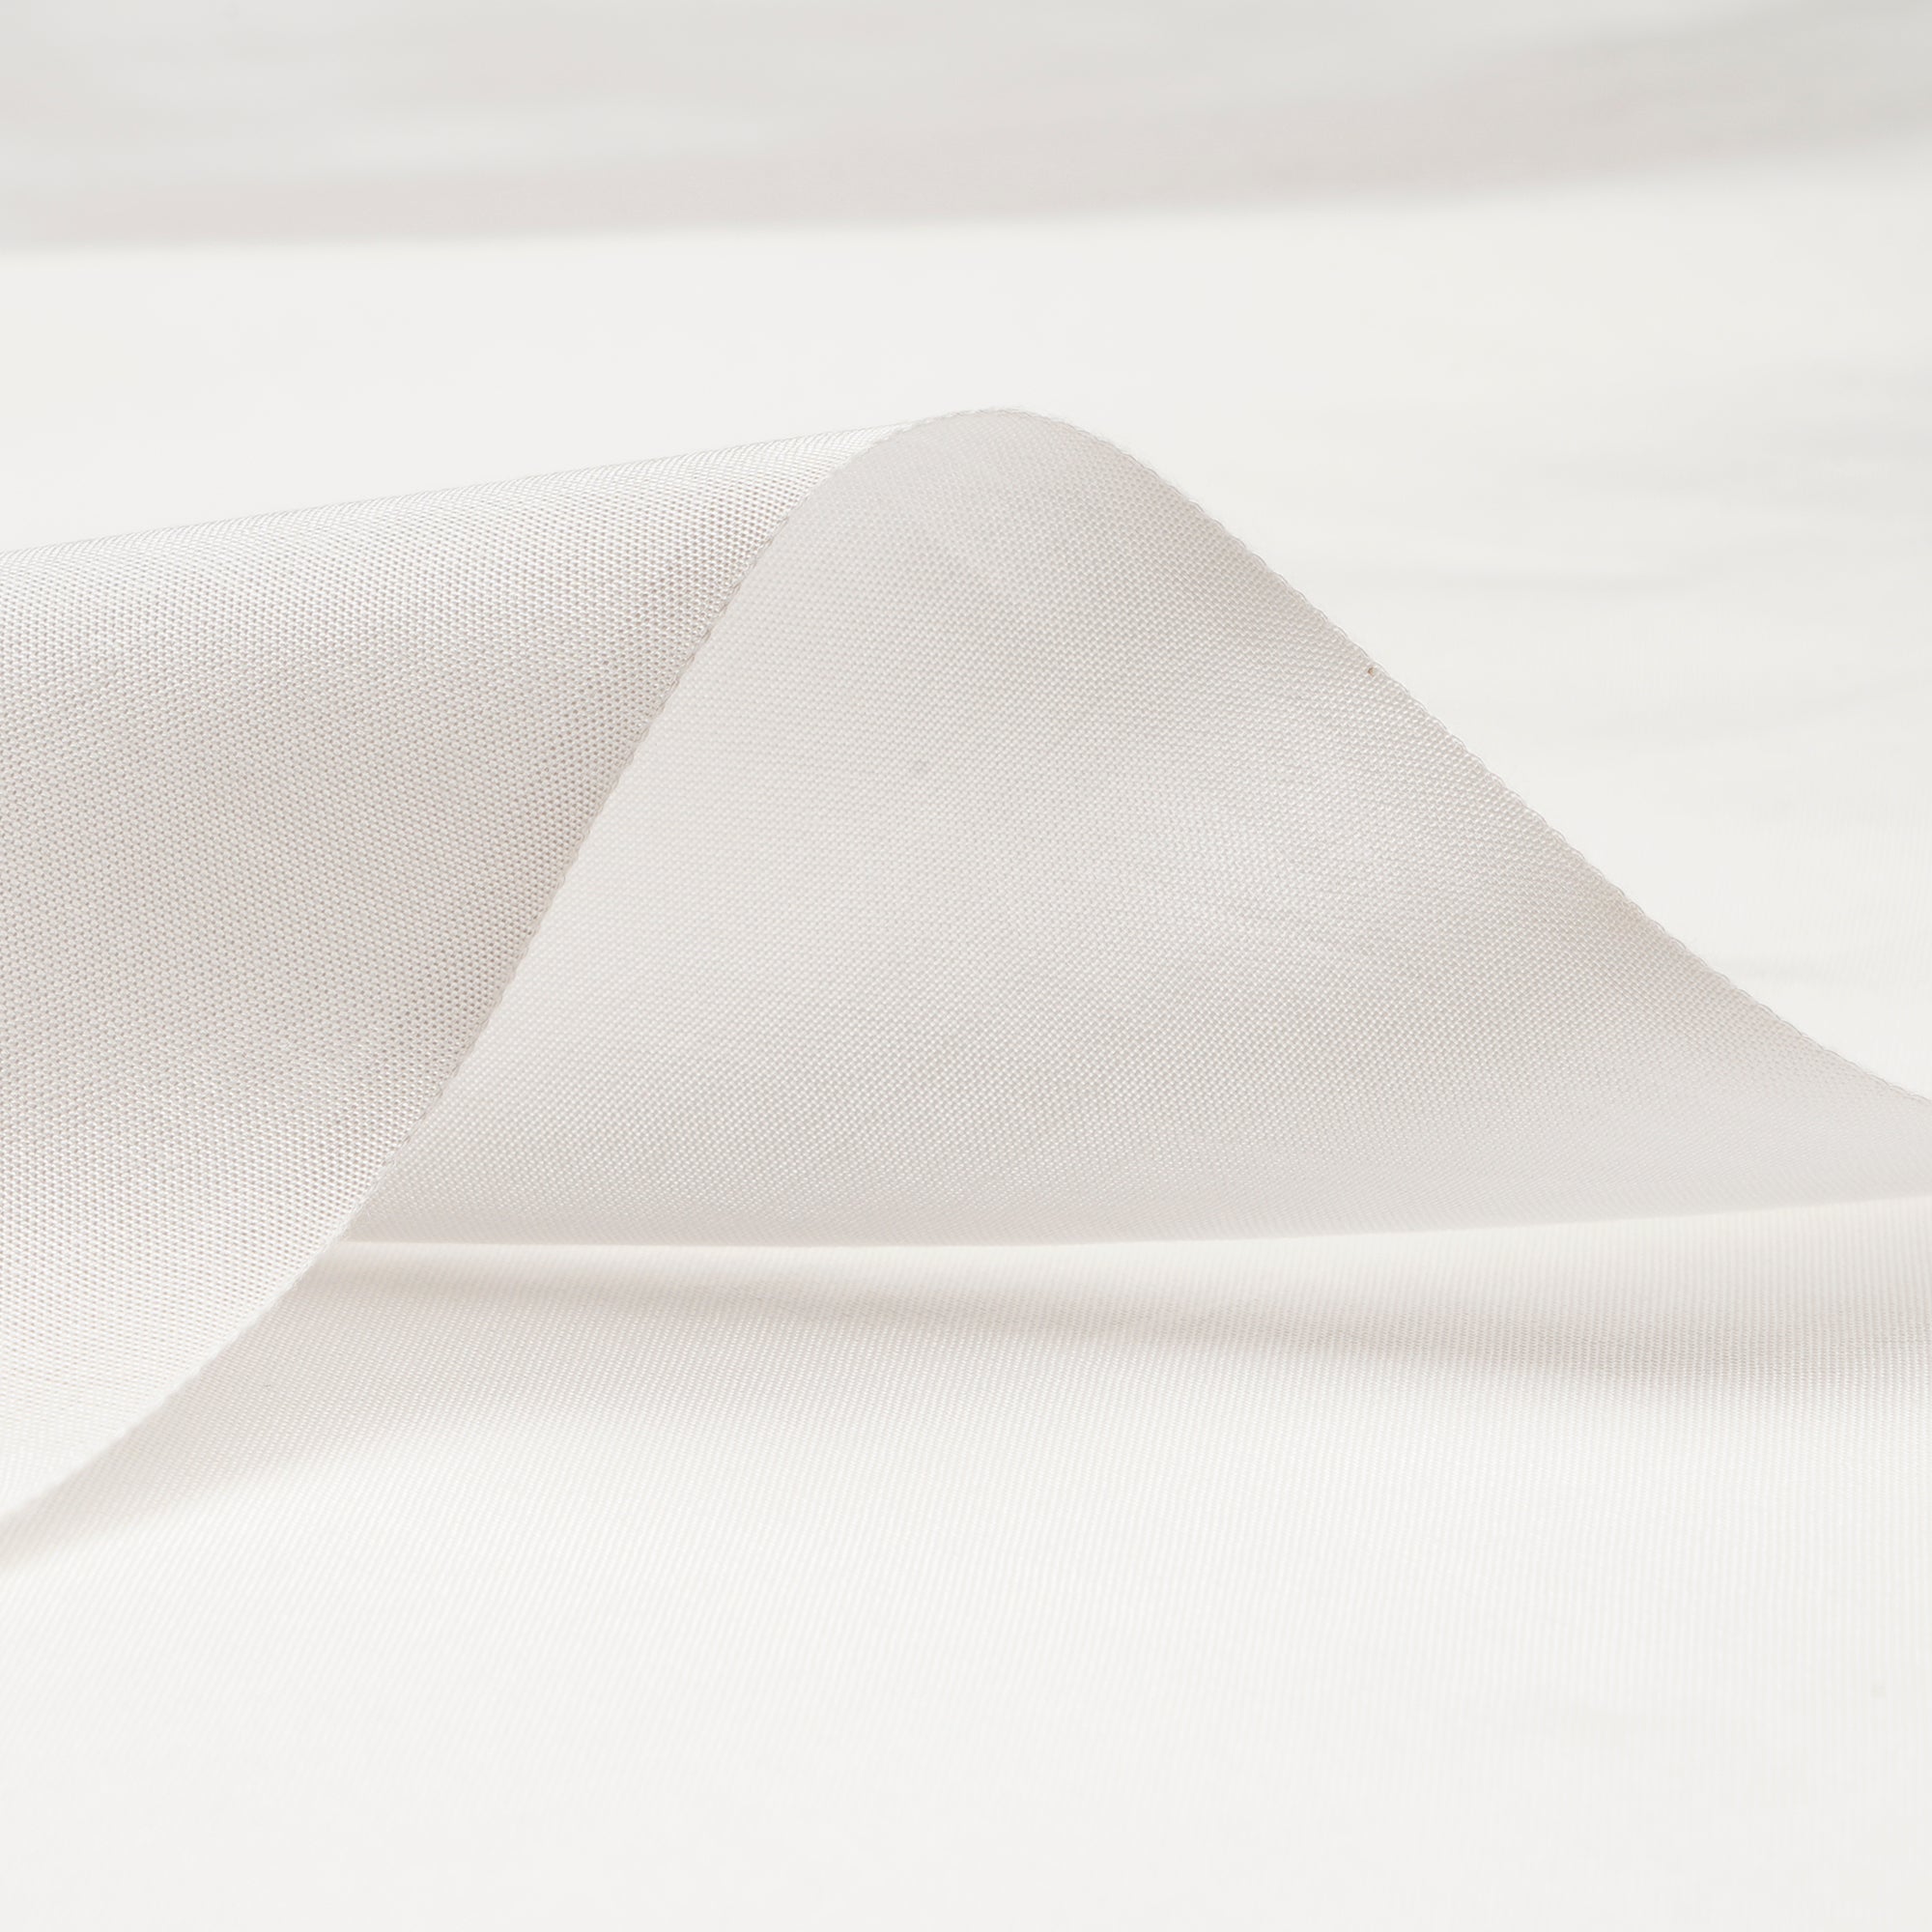 White Color Plain Bemberg Modal Dyeable Fabric